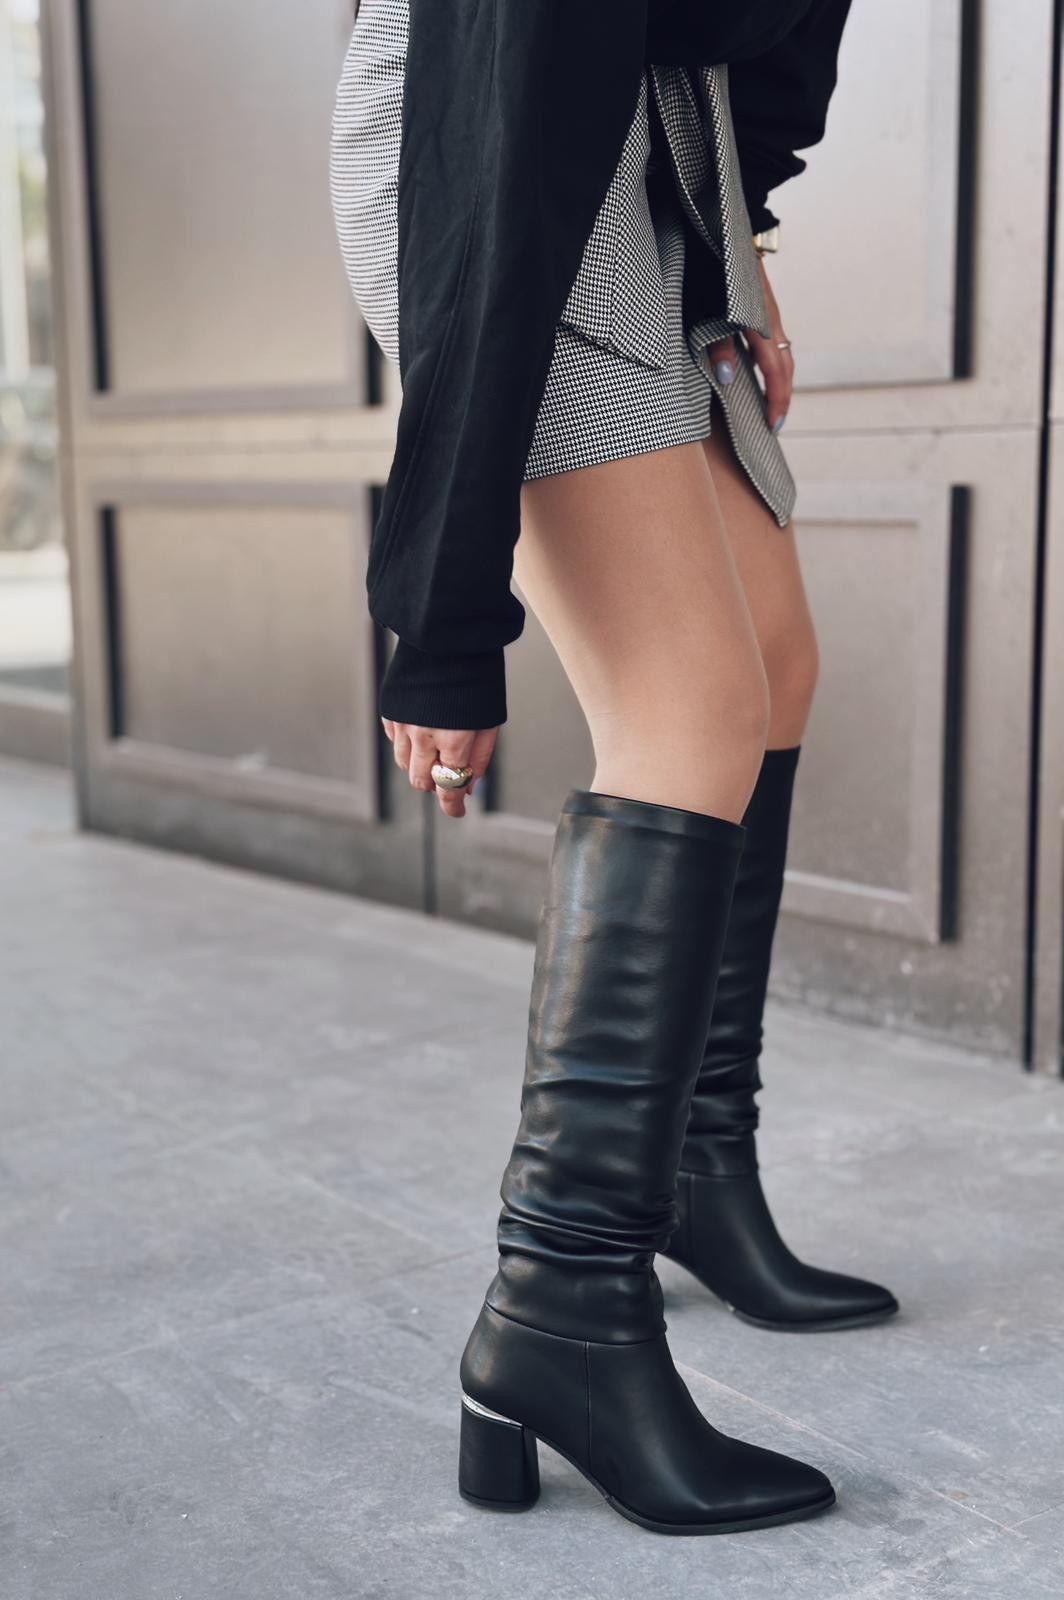 Votens Mat Deri Körüklü Kadın Topuklu Çizme Siyah